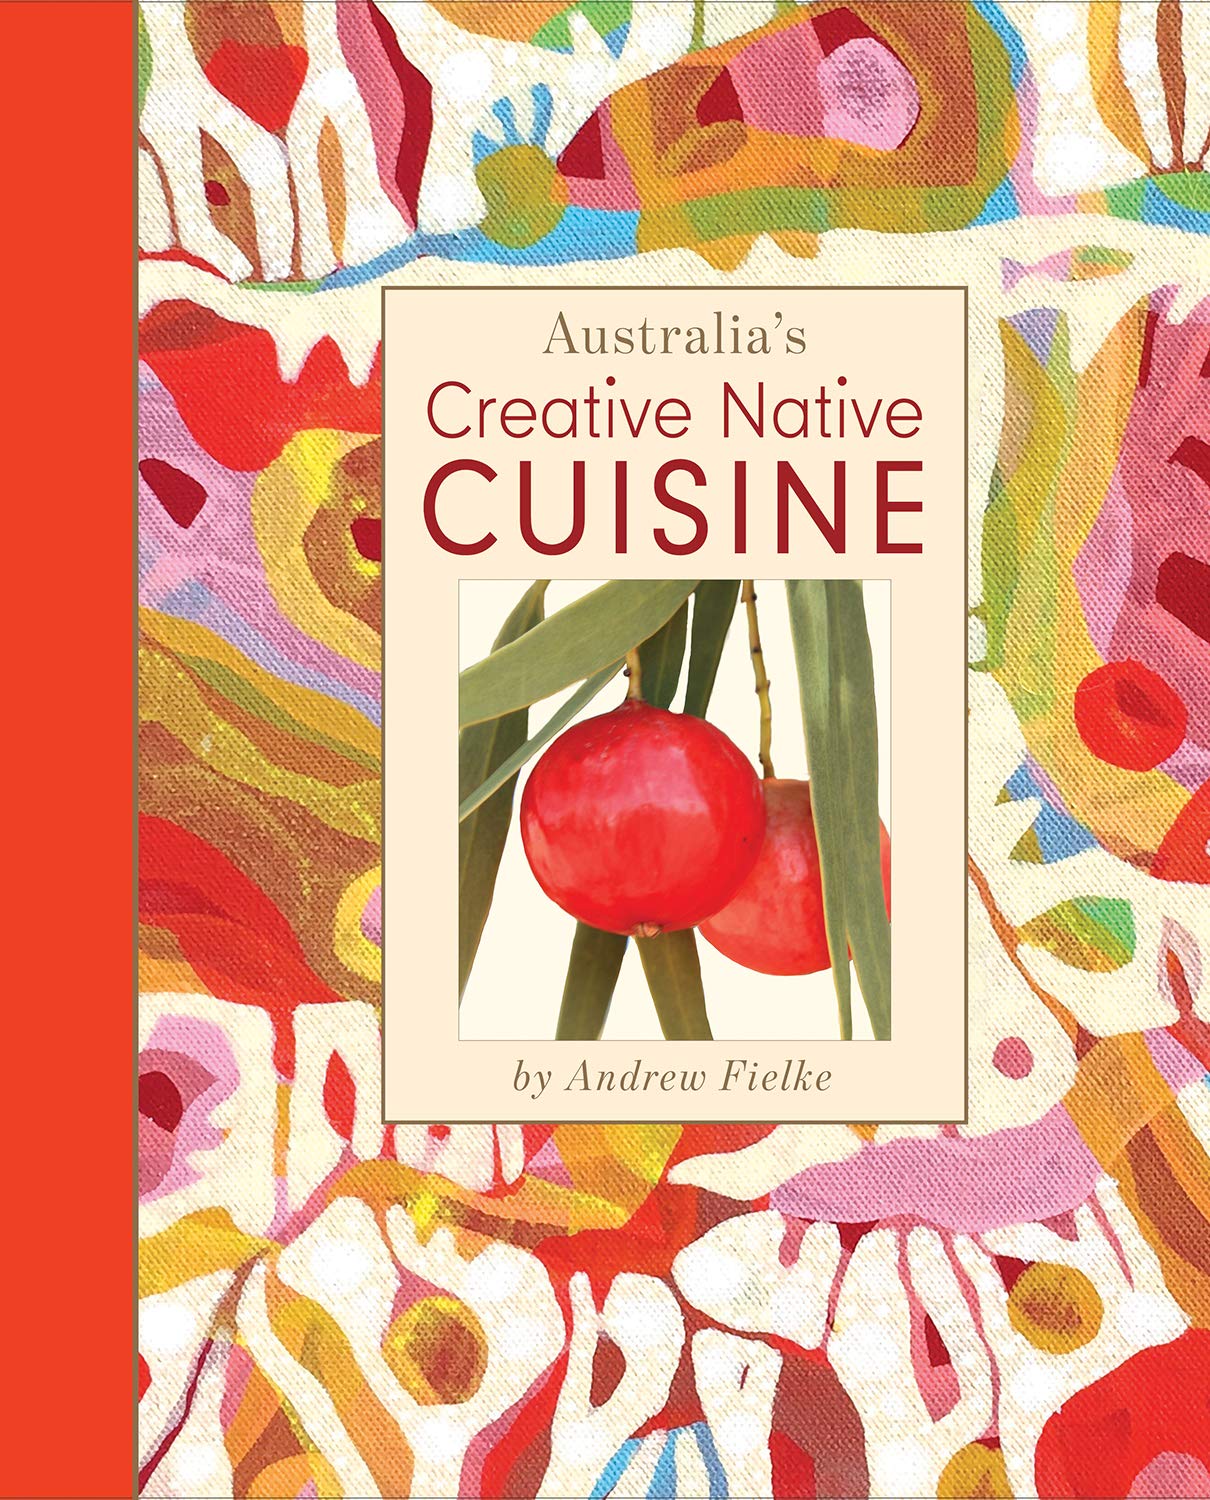 Australia's Creative Native Cuisine (Andrew Fielke, Luisa Adam)